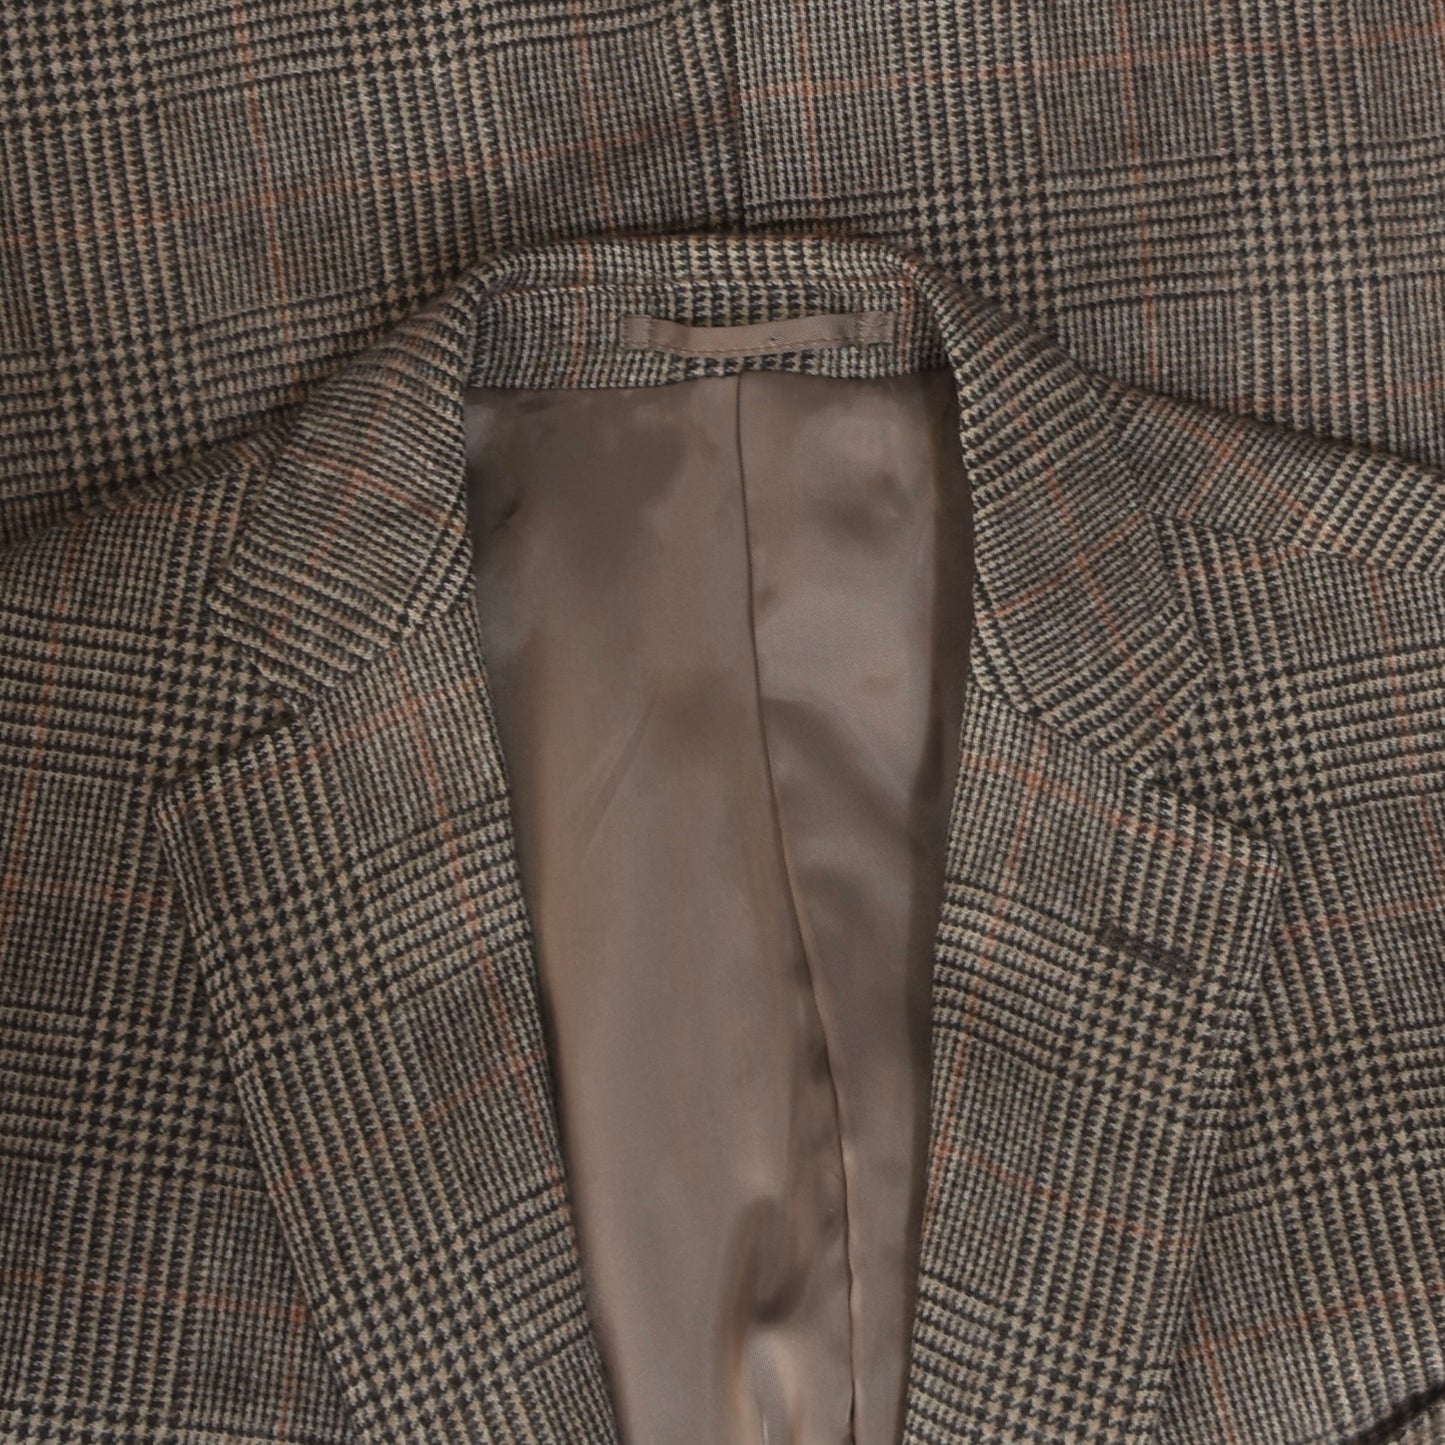 Maker's Shirt Kamakura Camel Hair Jacket ca. 50cm Chest - Prince of Wales